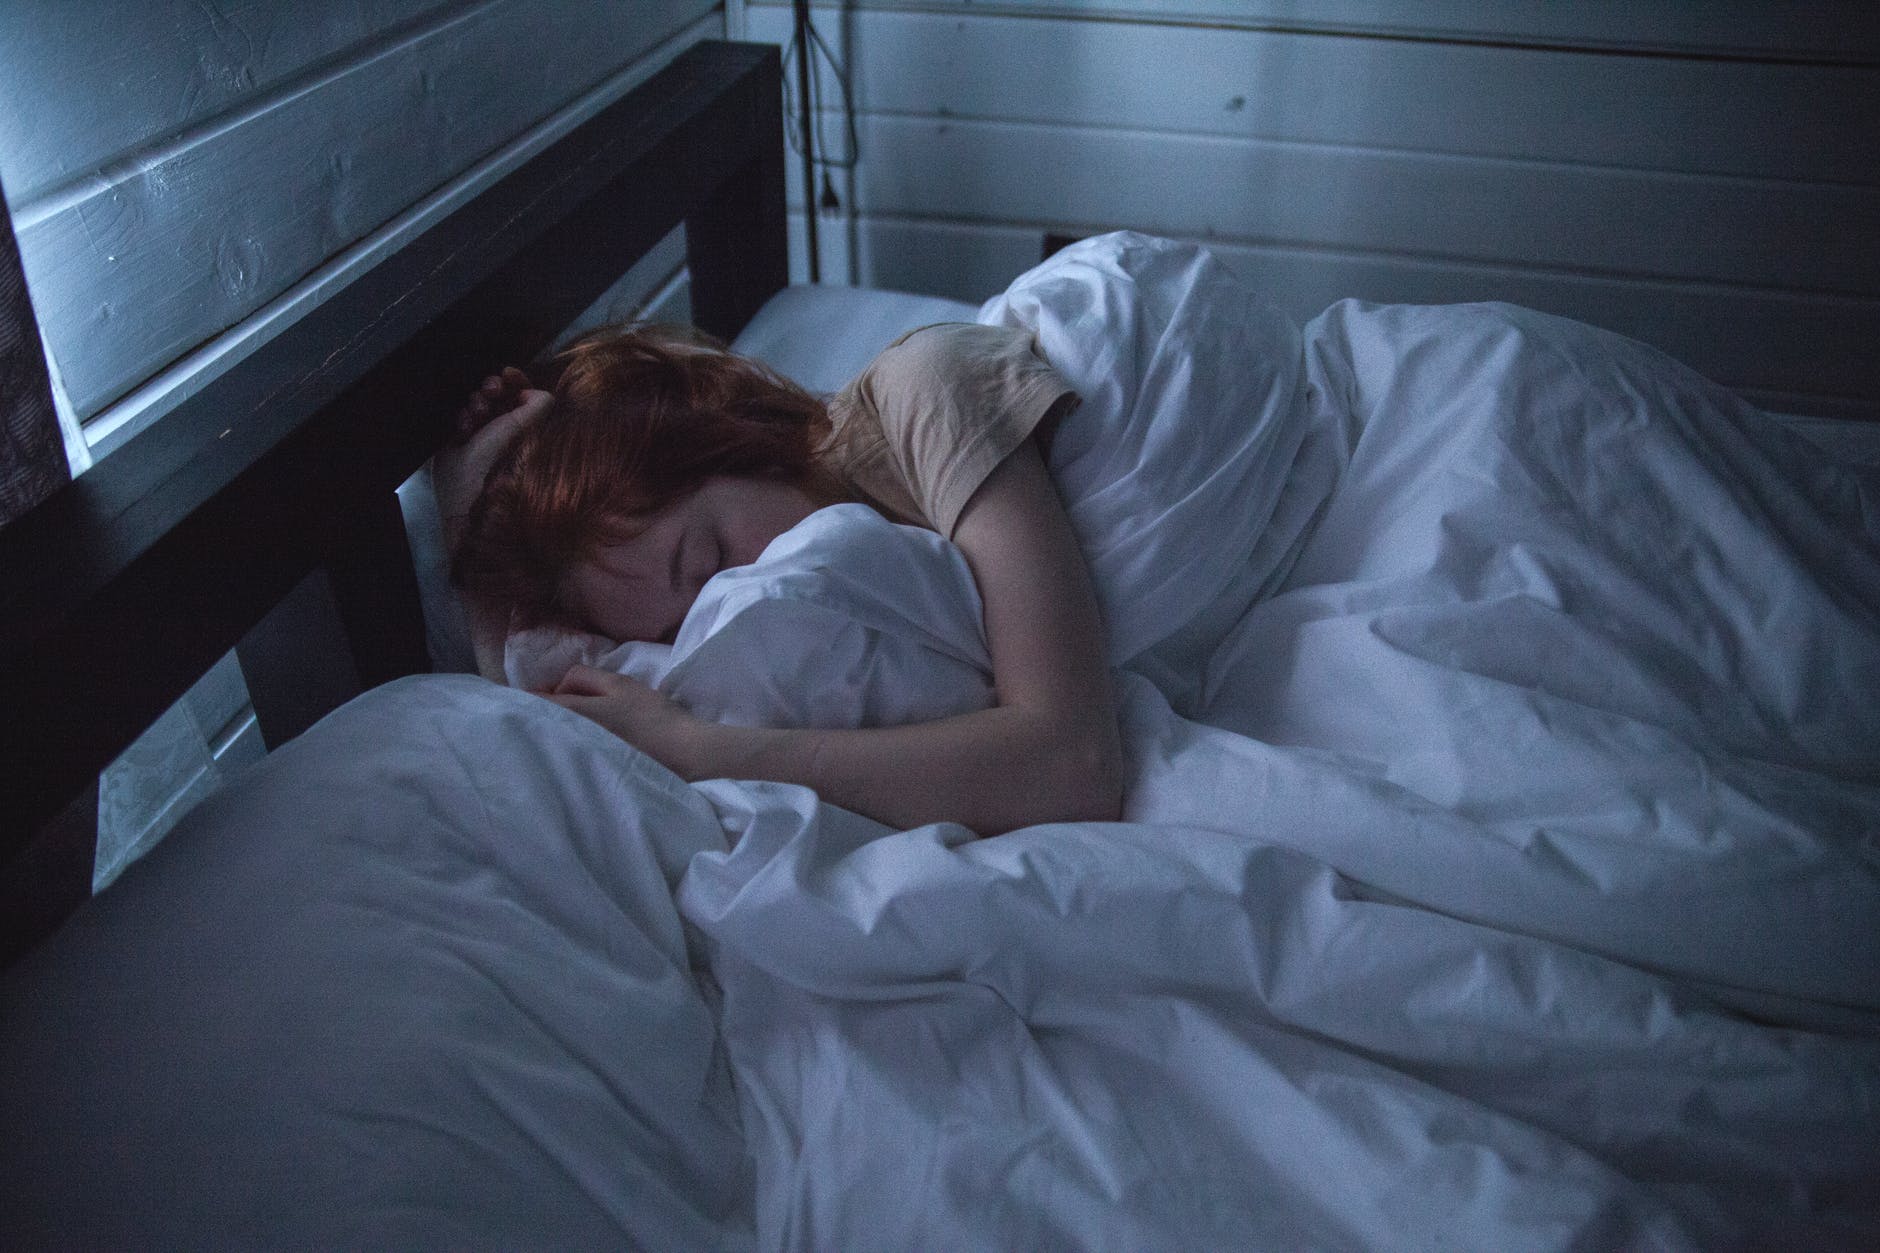 Tidur penting untuk meastikan badan kita mendapat rehat yang cukup